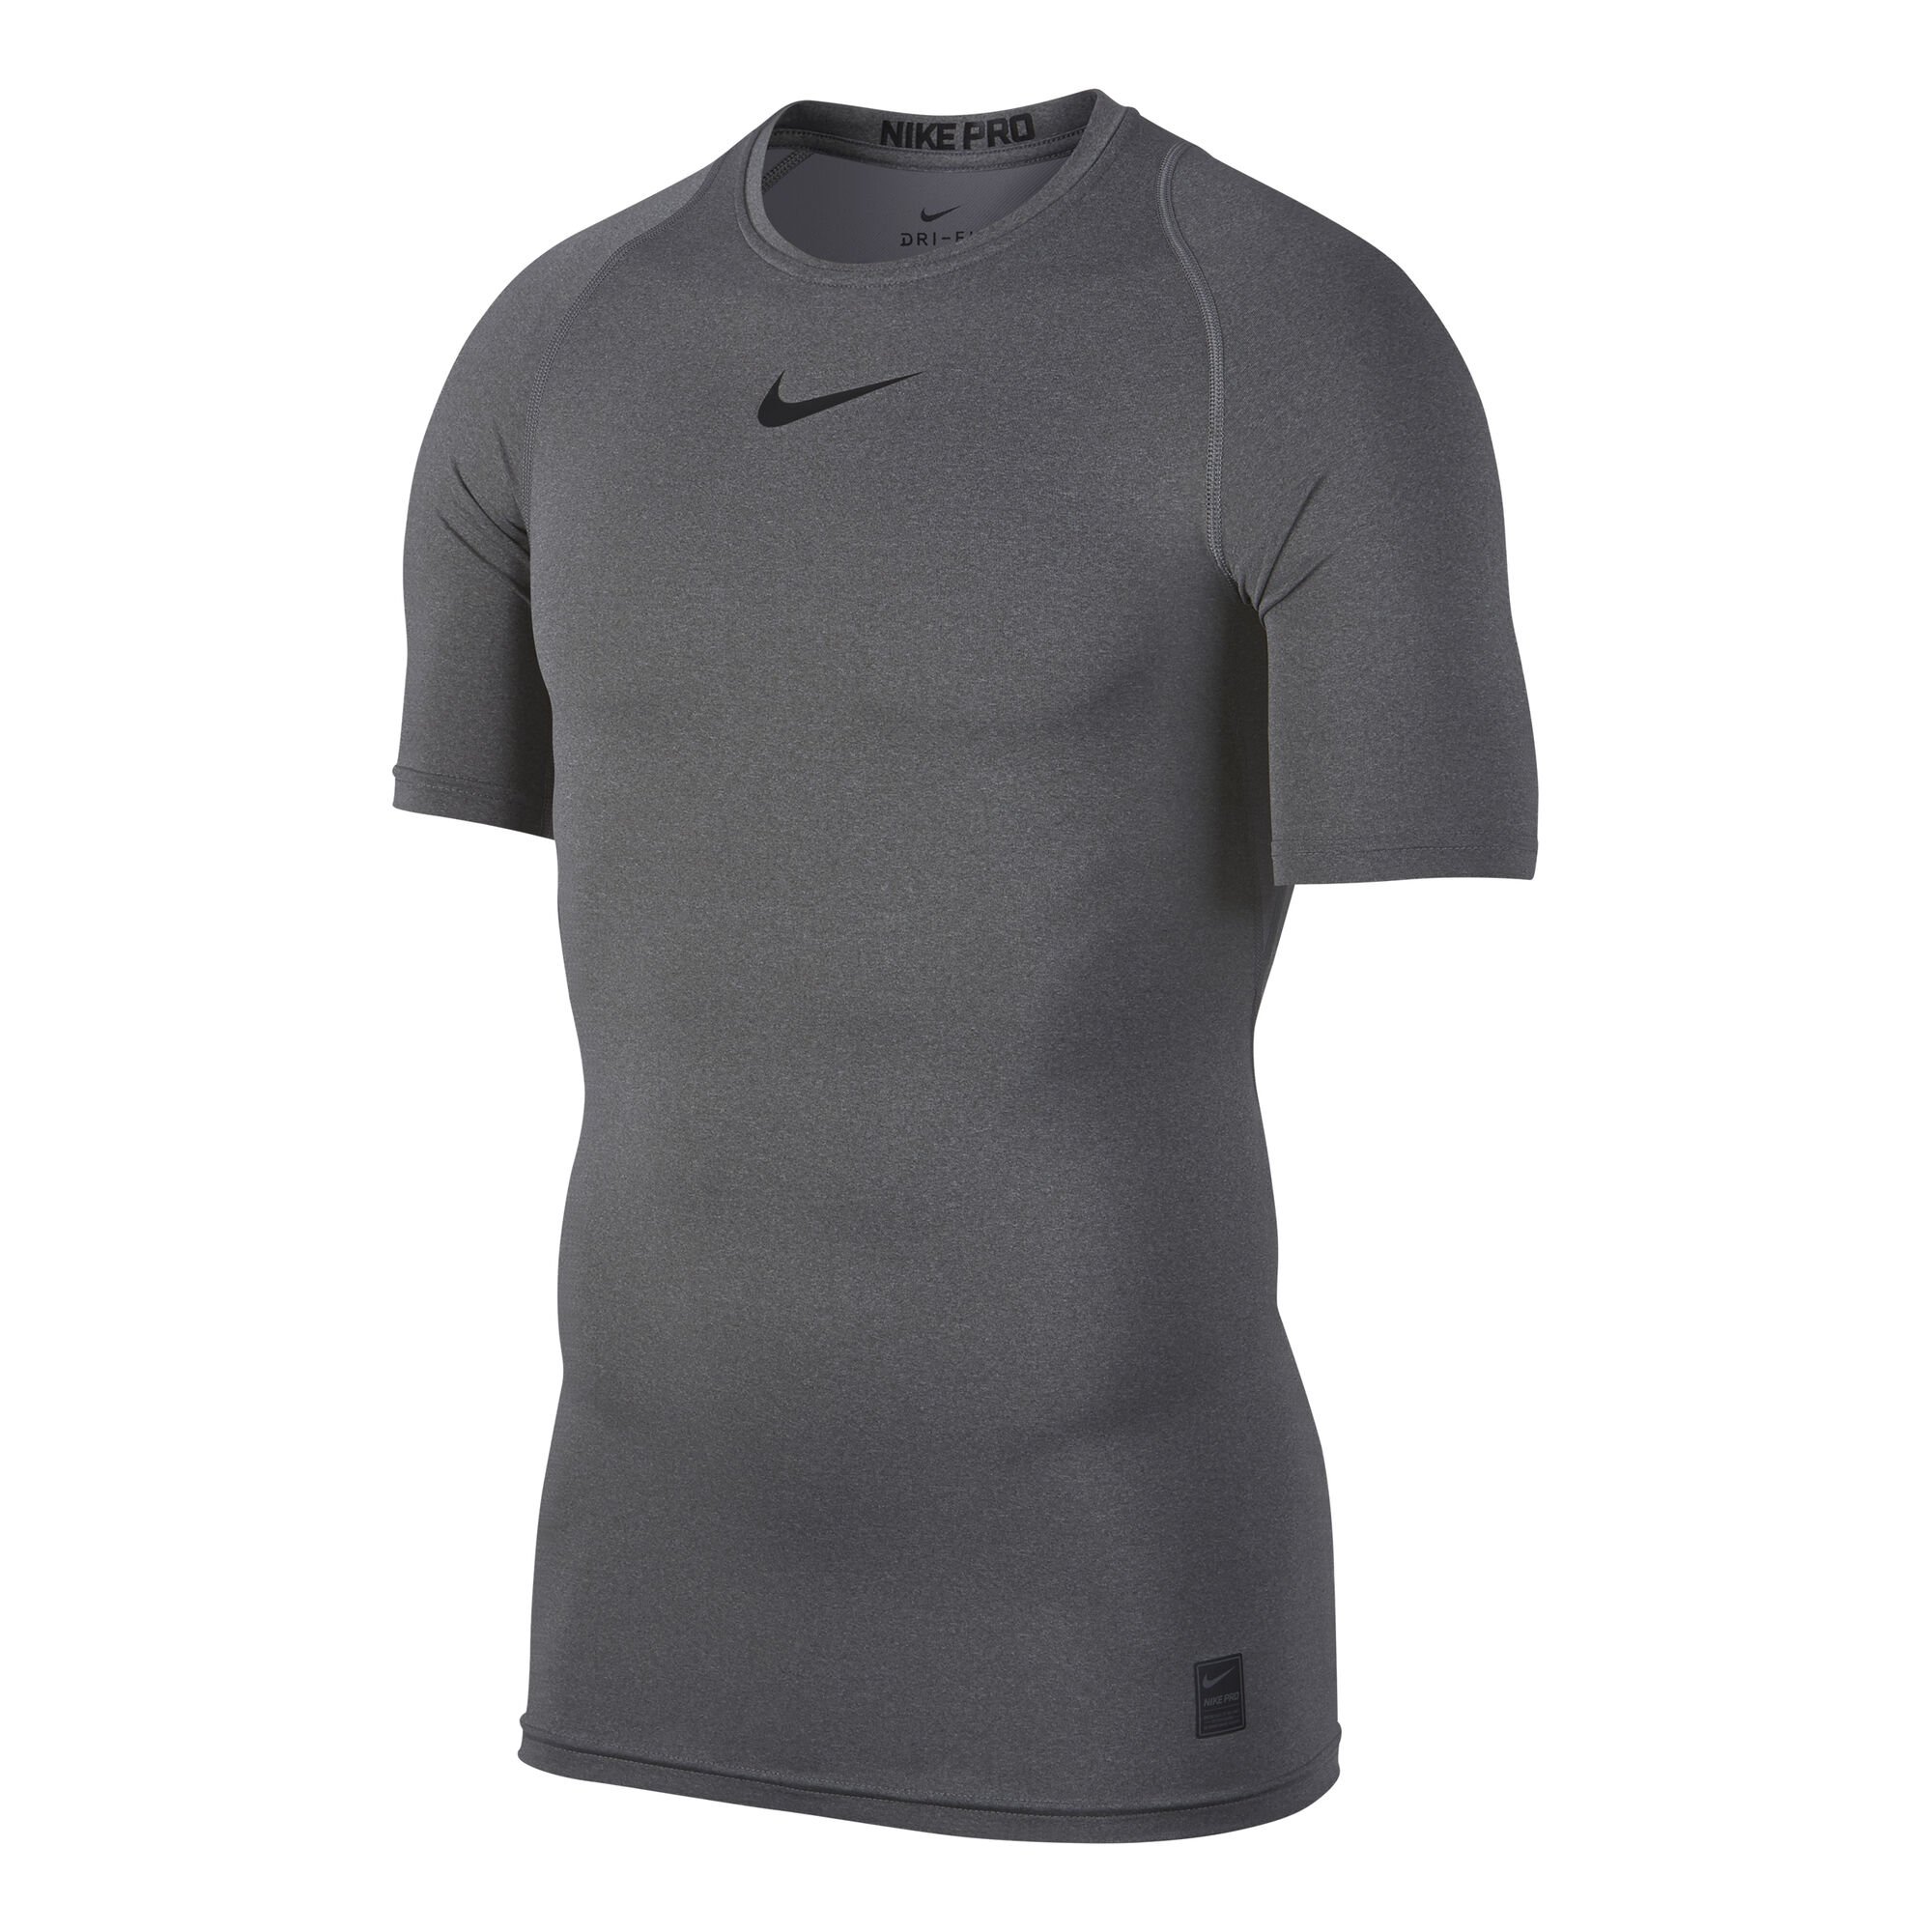 buy Nike Pro Comp T-Shirt Men - Grey, Black online | Tennis-Point